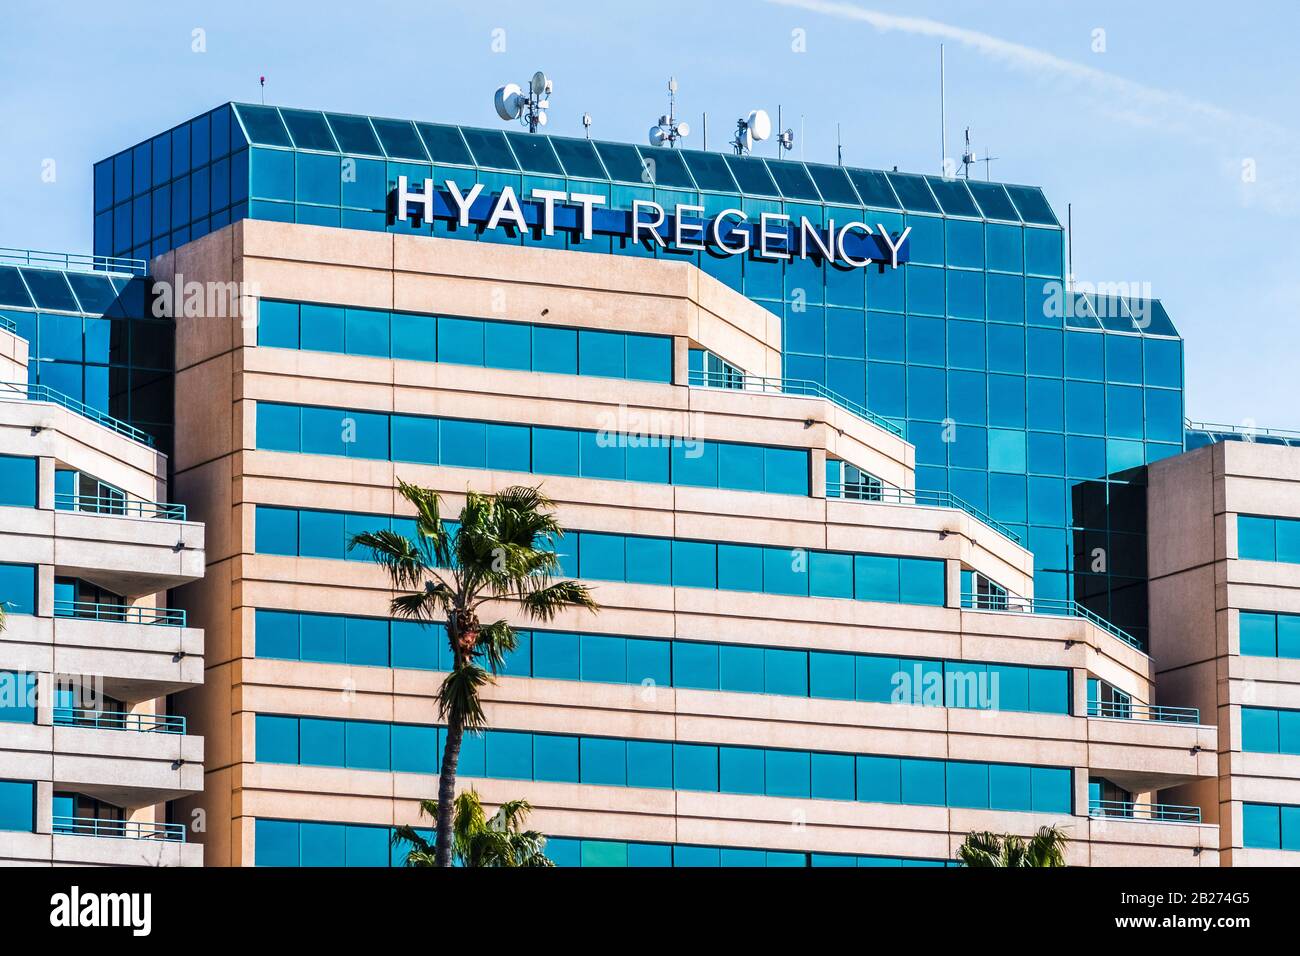 L'hôtel Hyatt Regency et le palais des congrès de Santa Clara, Santa Clara,  CA (vu de l'hôtel Hilton Photo Stock - Alamy